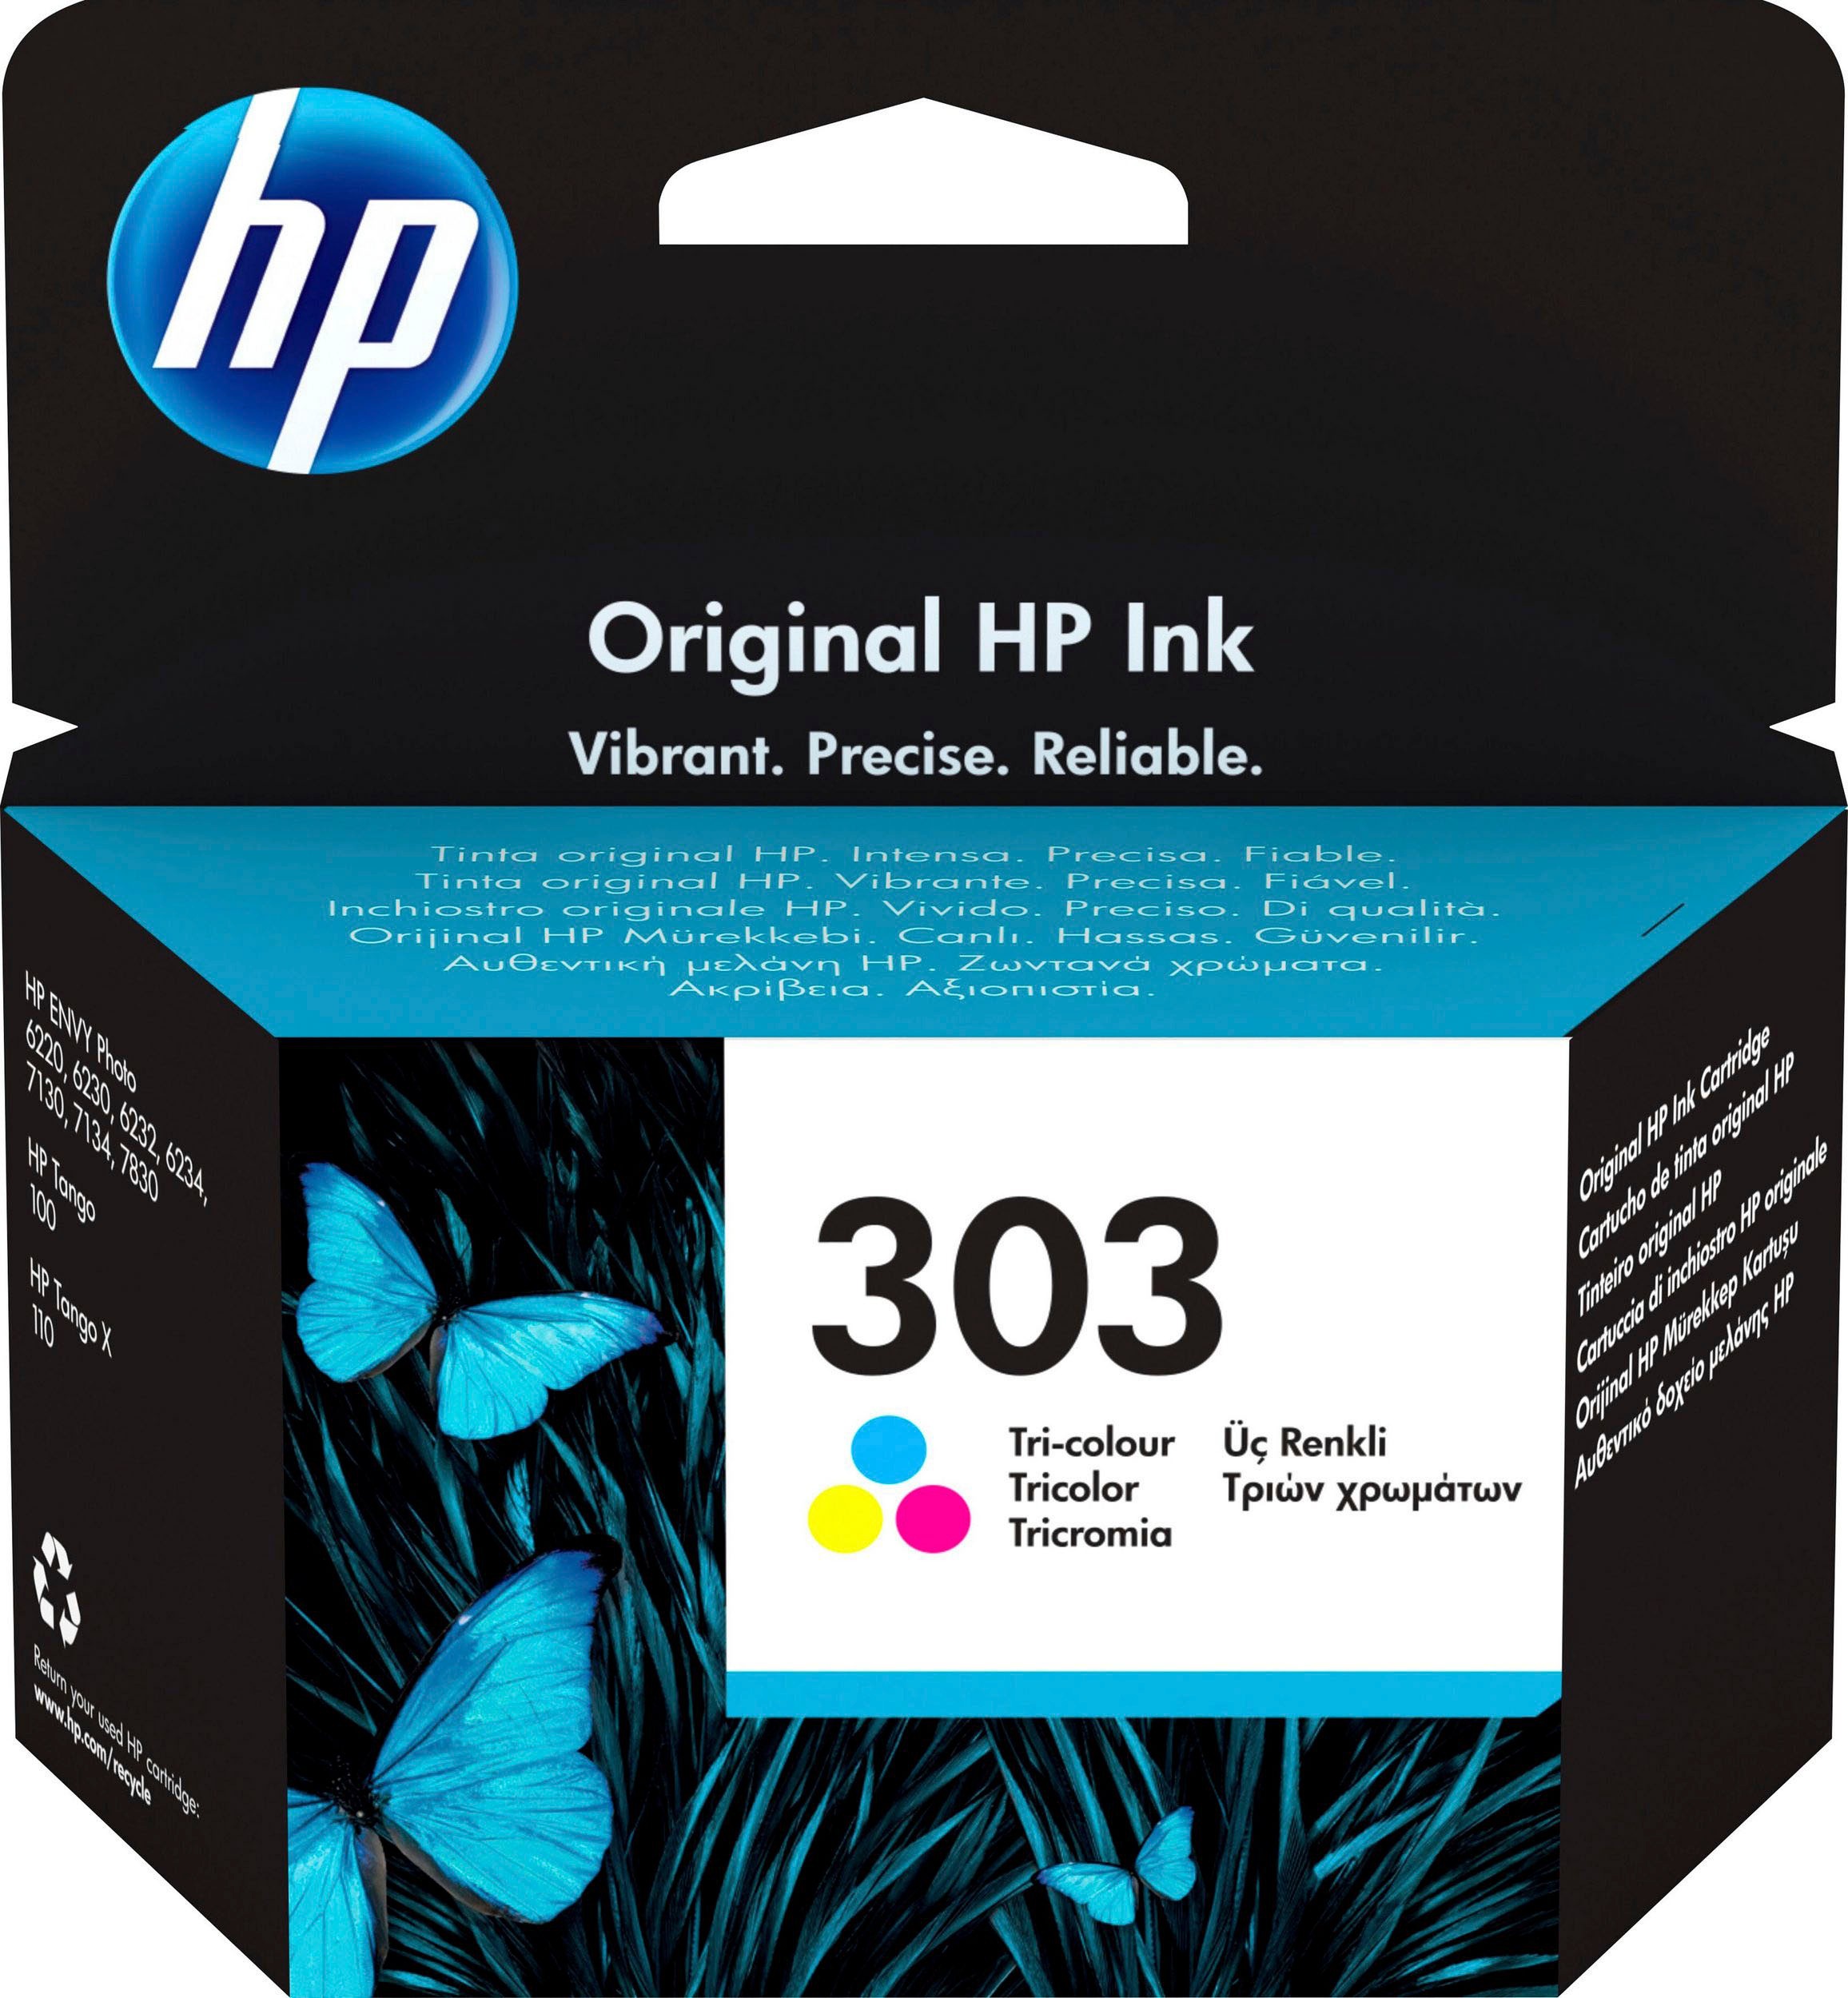 HP Tintenpatrone »303«, (1 St.), original HP Druckerpatrone, Instant Ink, cyan/magenta/yellow/schwarz